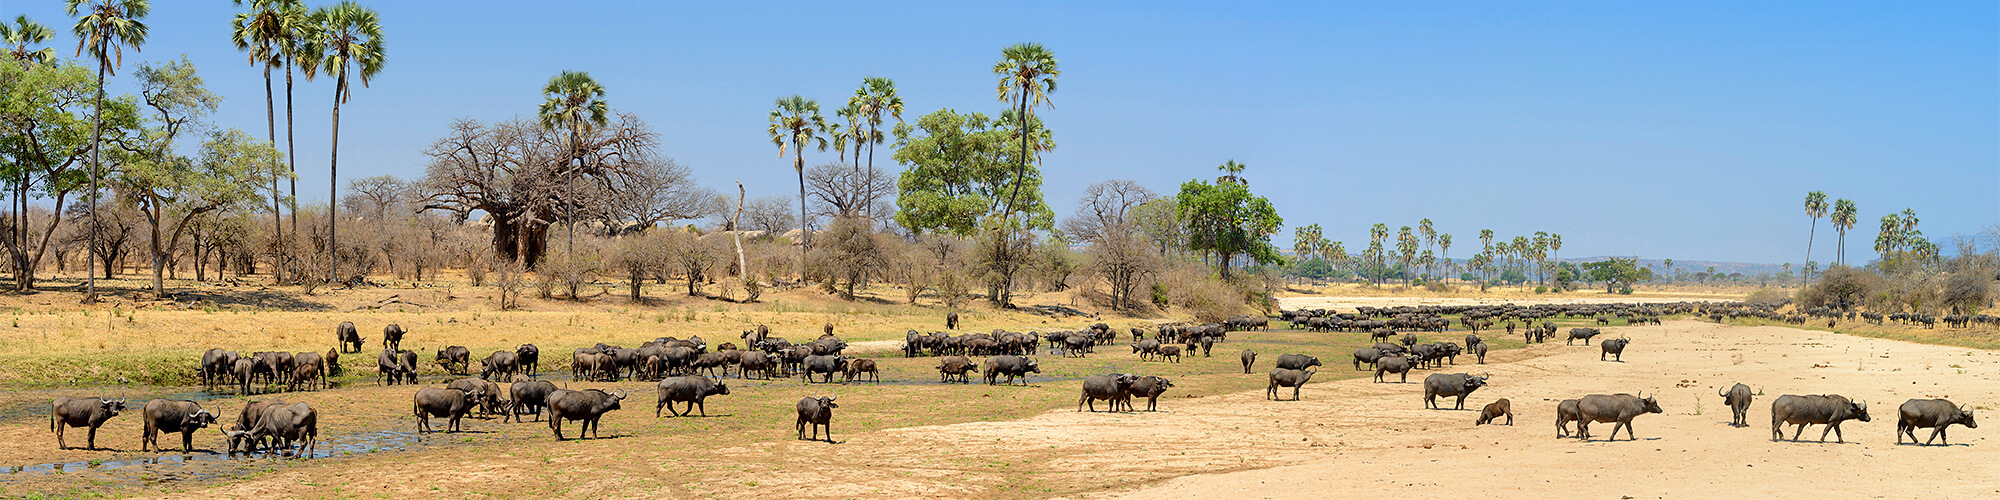 Fuss-Safari in West-Tanzania - ganz nah, mittendrin